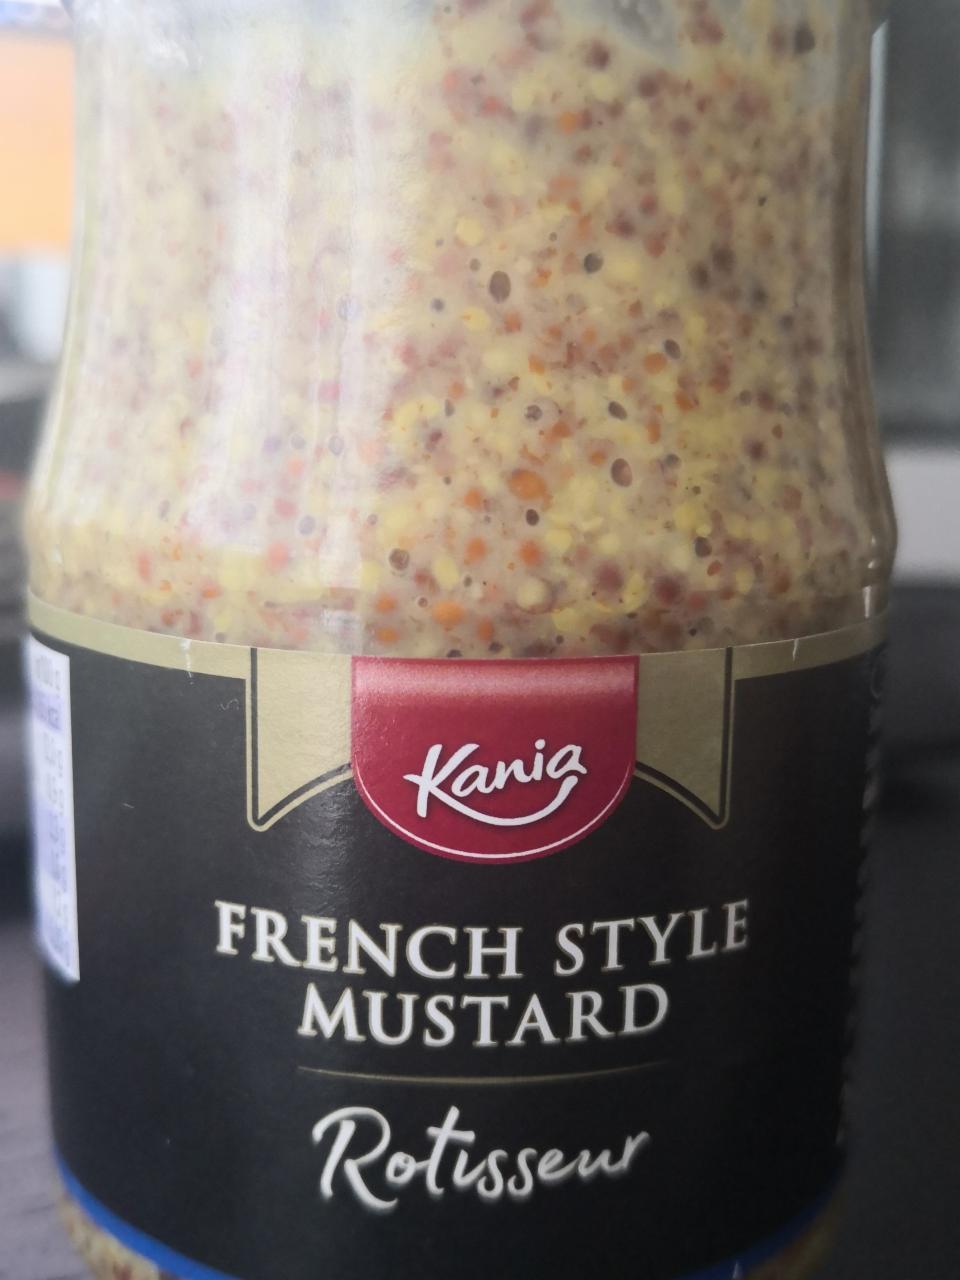 Fotografie - French Mustard Rotisseur Kania